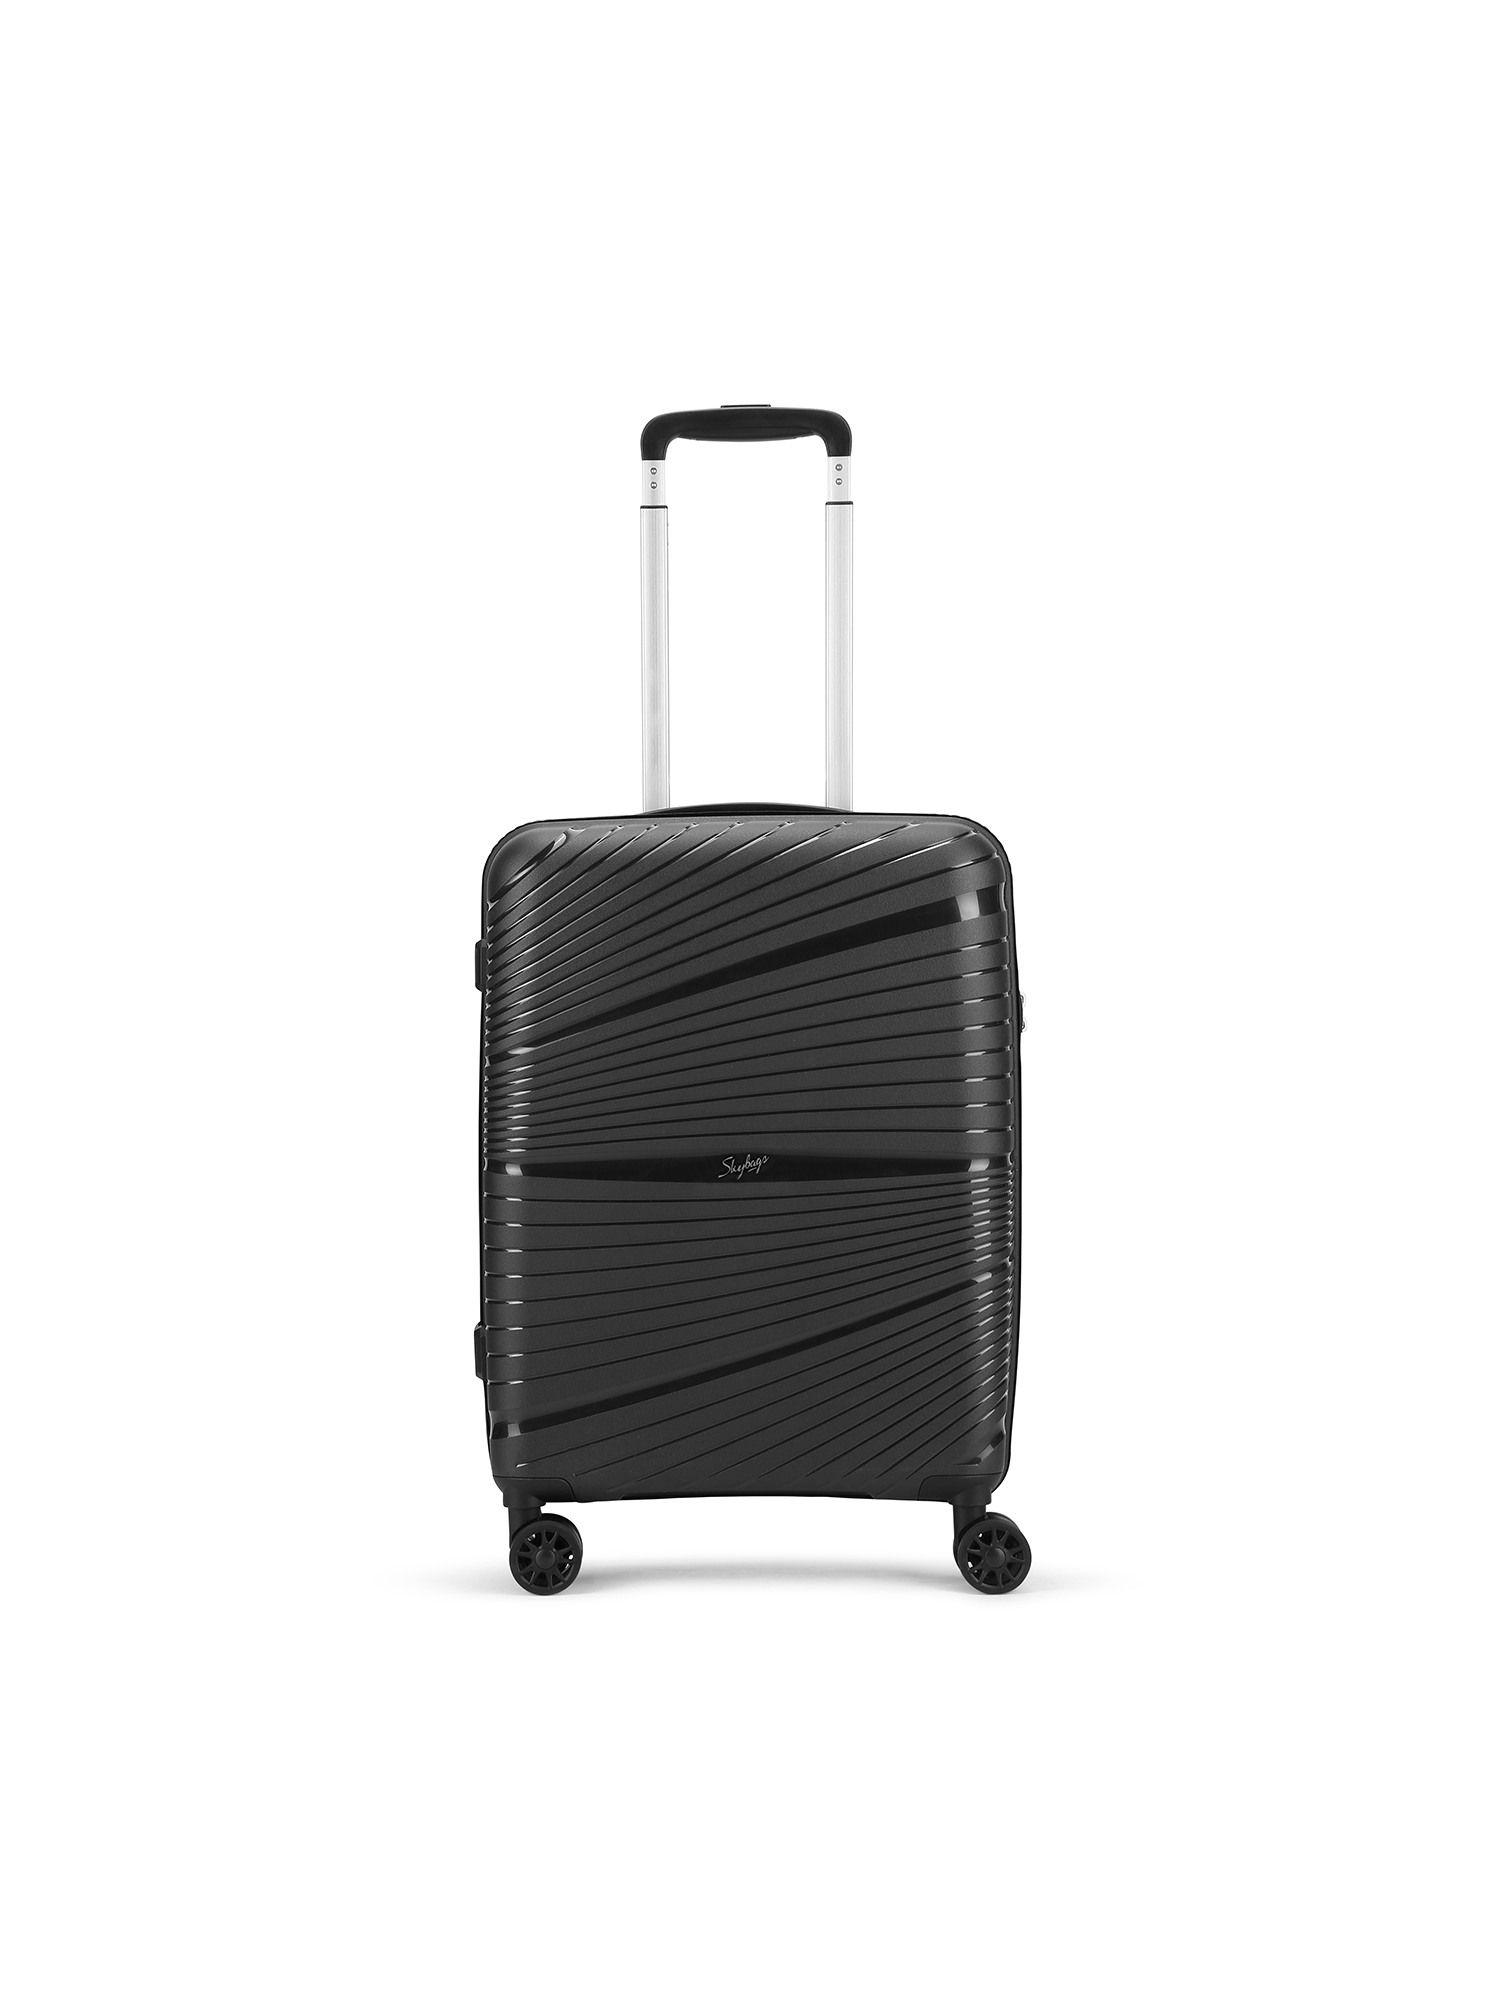 skylite black hard luggage 8-wheel suitcase cabin trolley bags